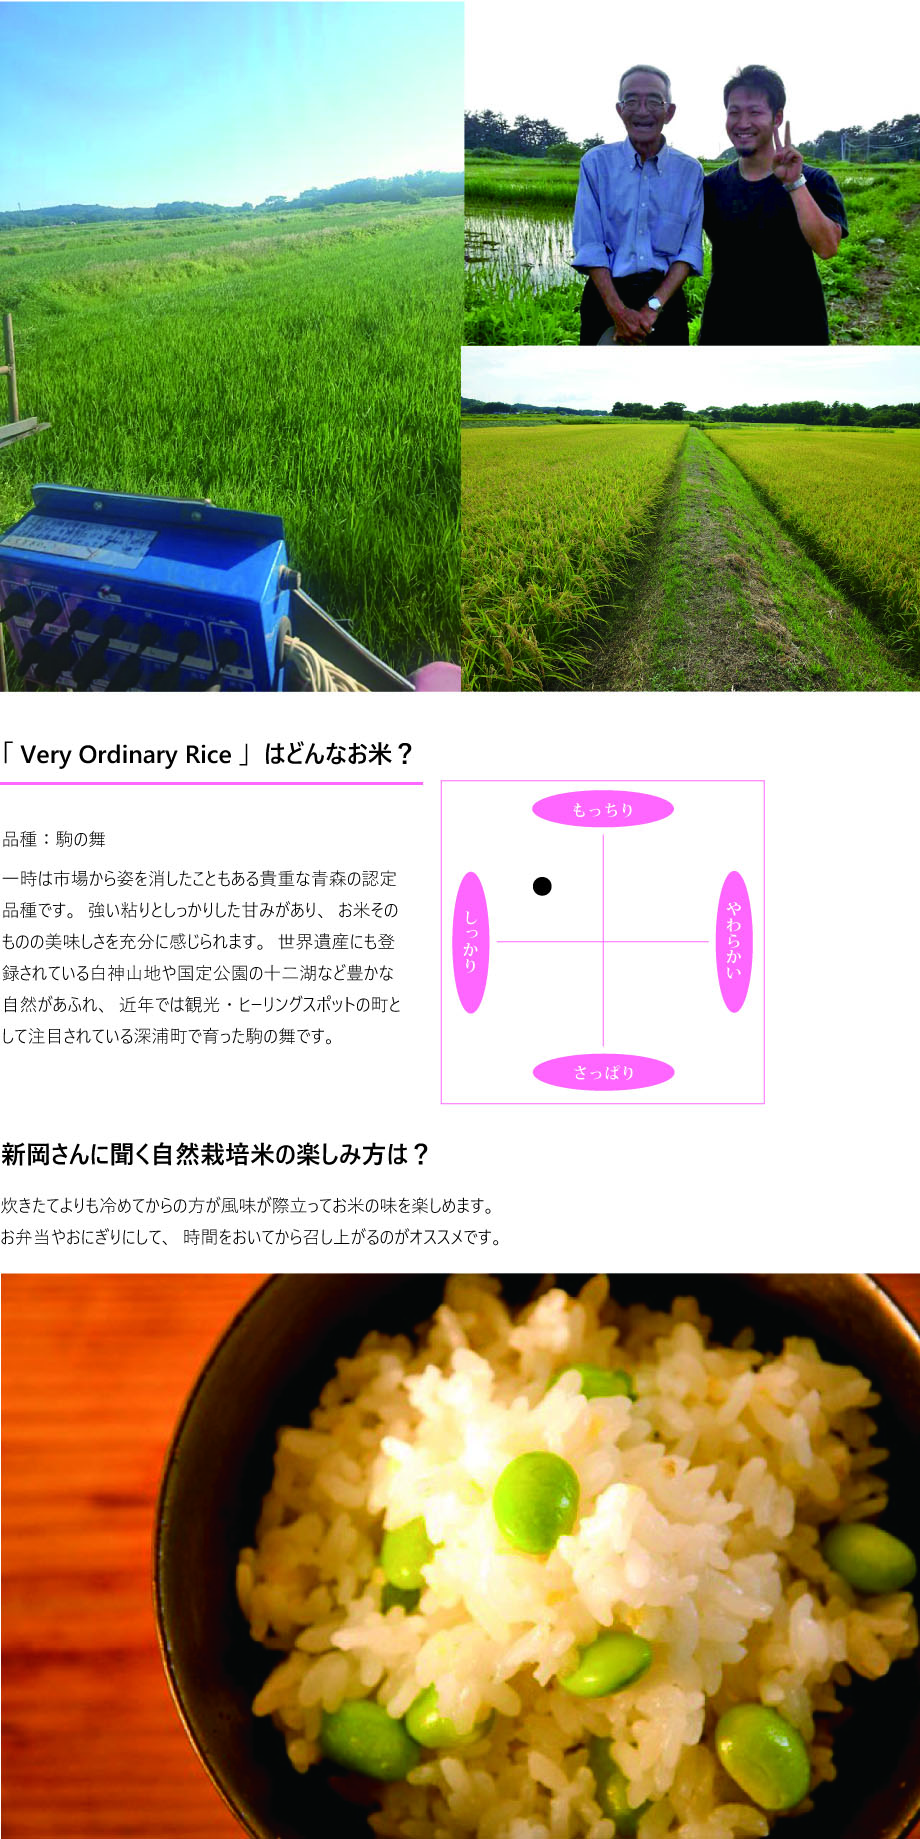 (R02産)Very Ordinary Rice白米5kg